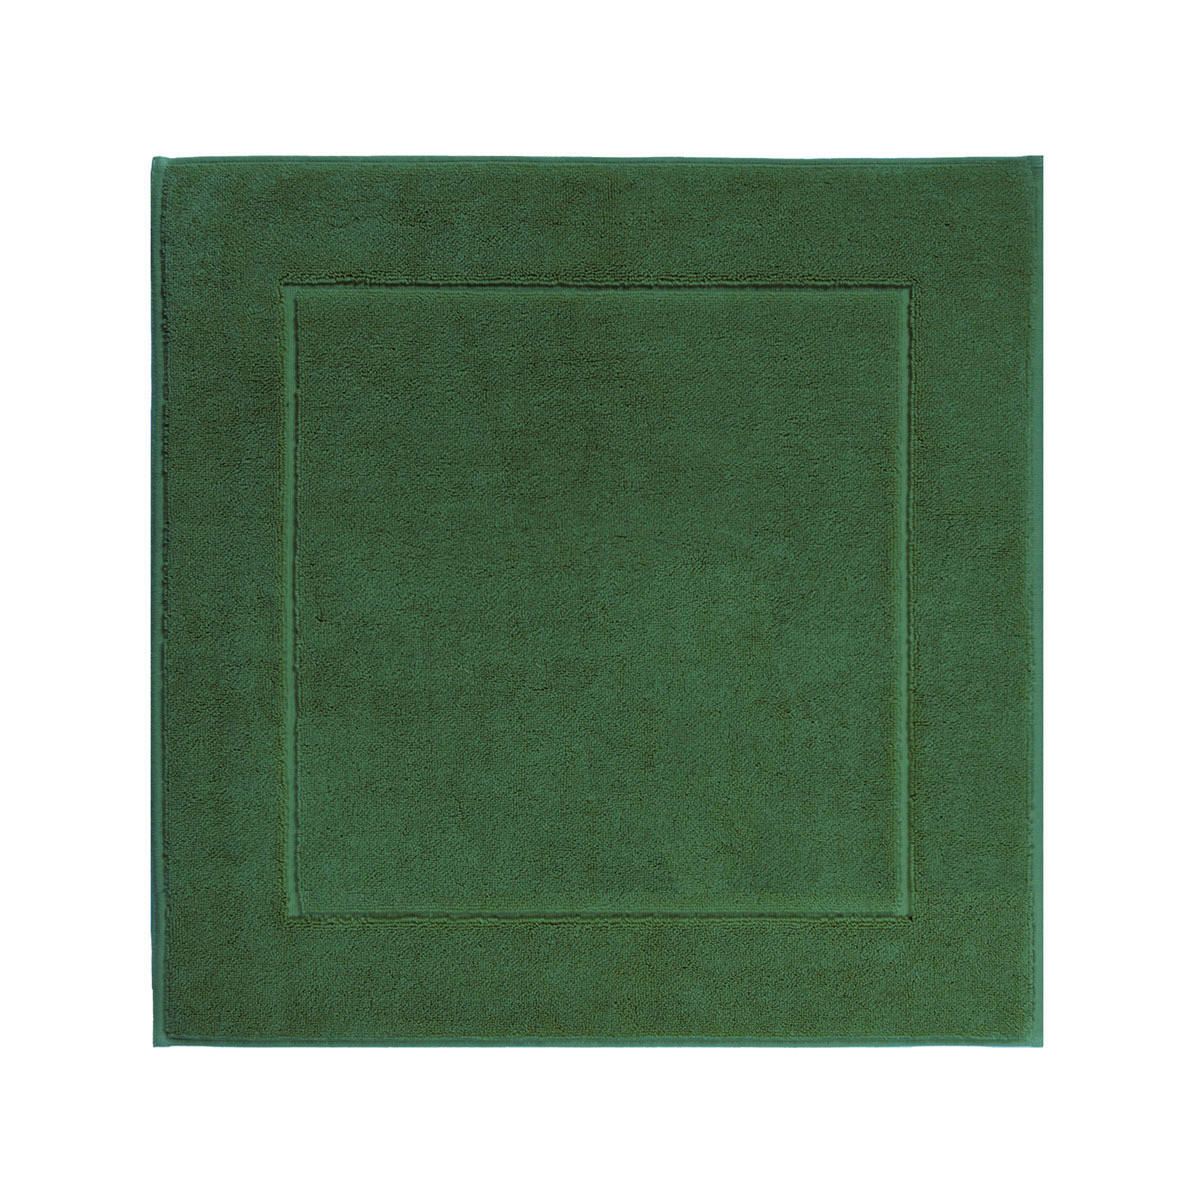 BADEMATTE London 60/60 cm  - Grün, Basics, Kunststoff/Textil (60/60cm) - Aquanova